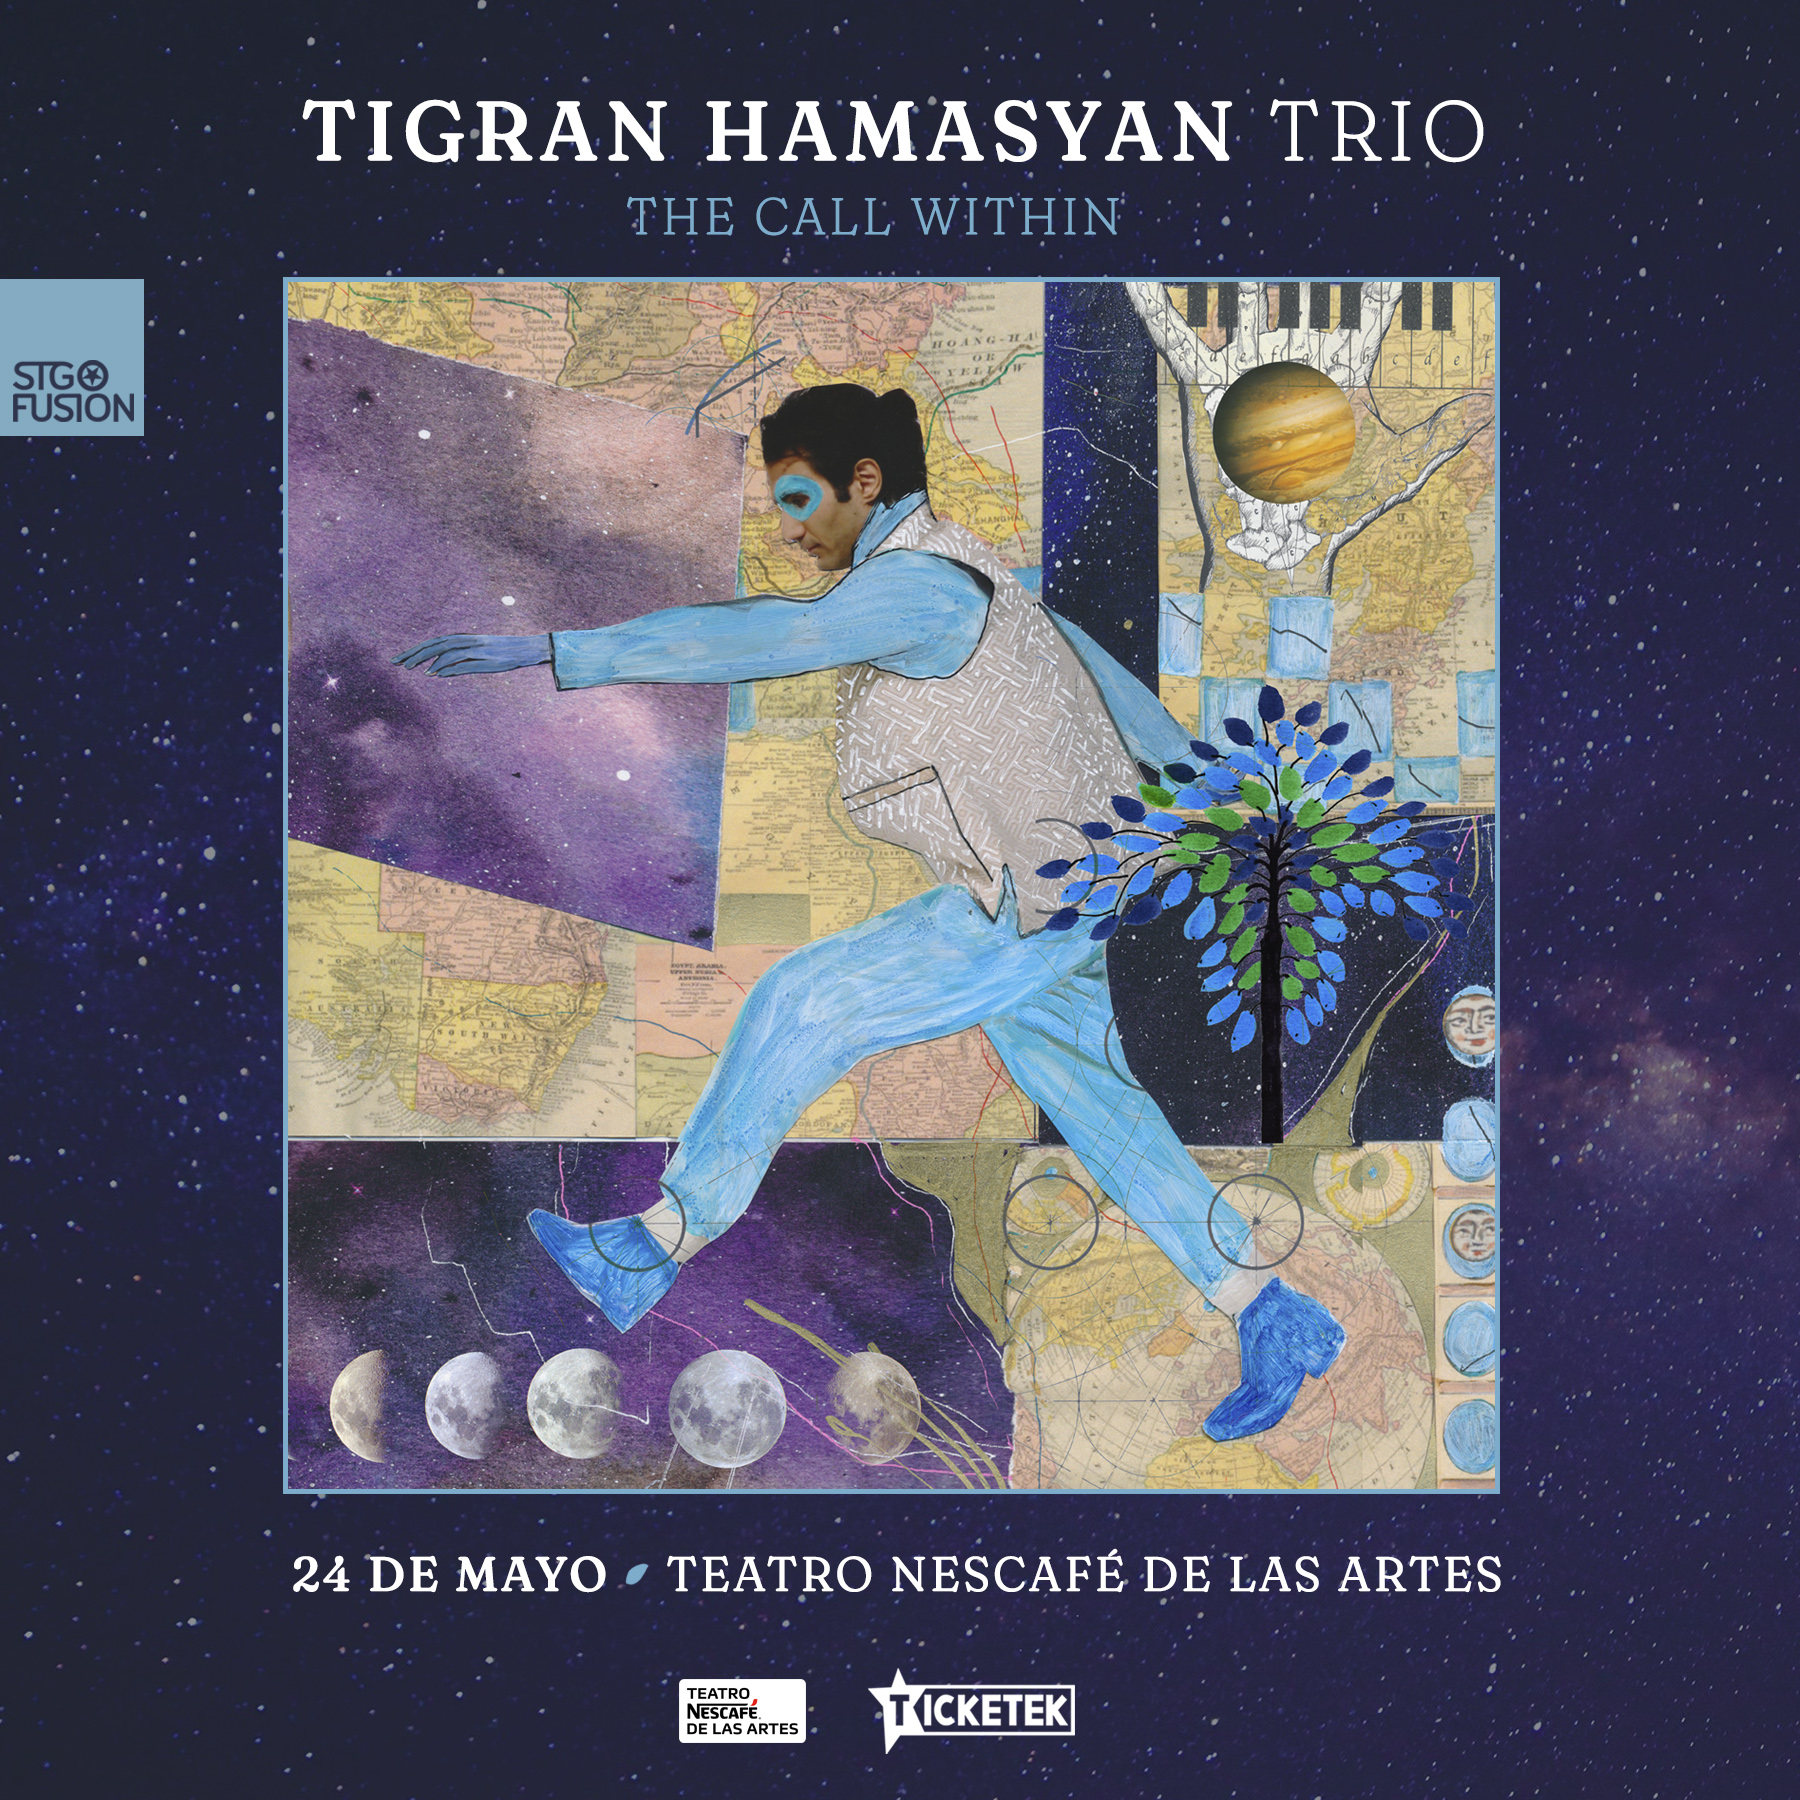 Sesión de jazz: Tigran Hamasyan viene a Chile